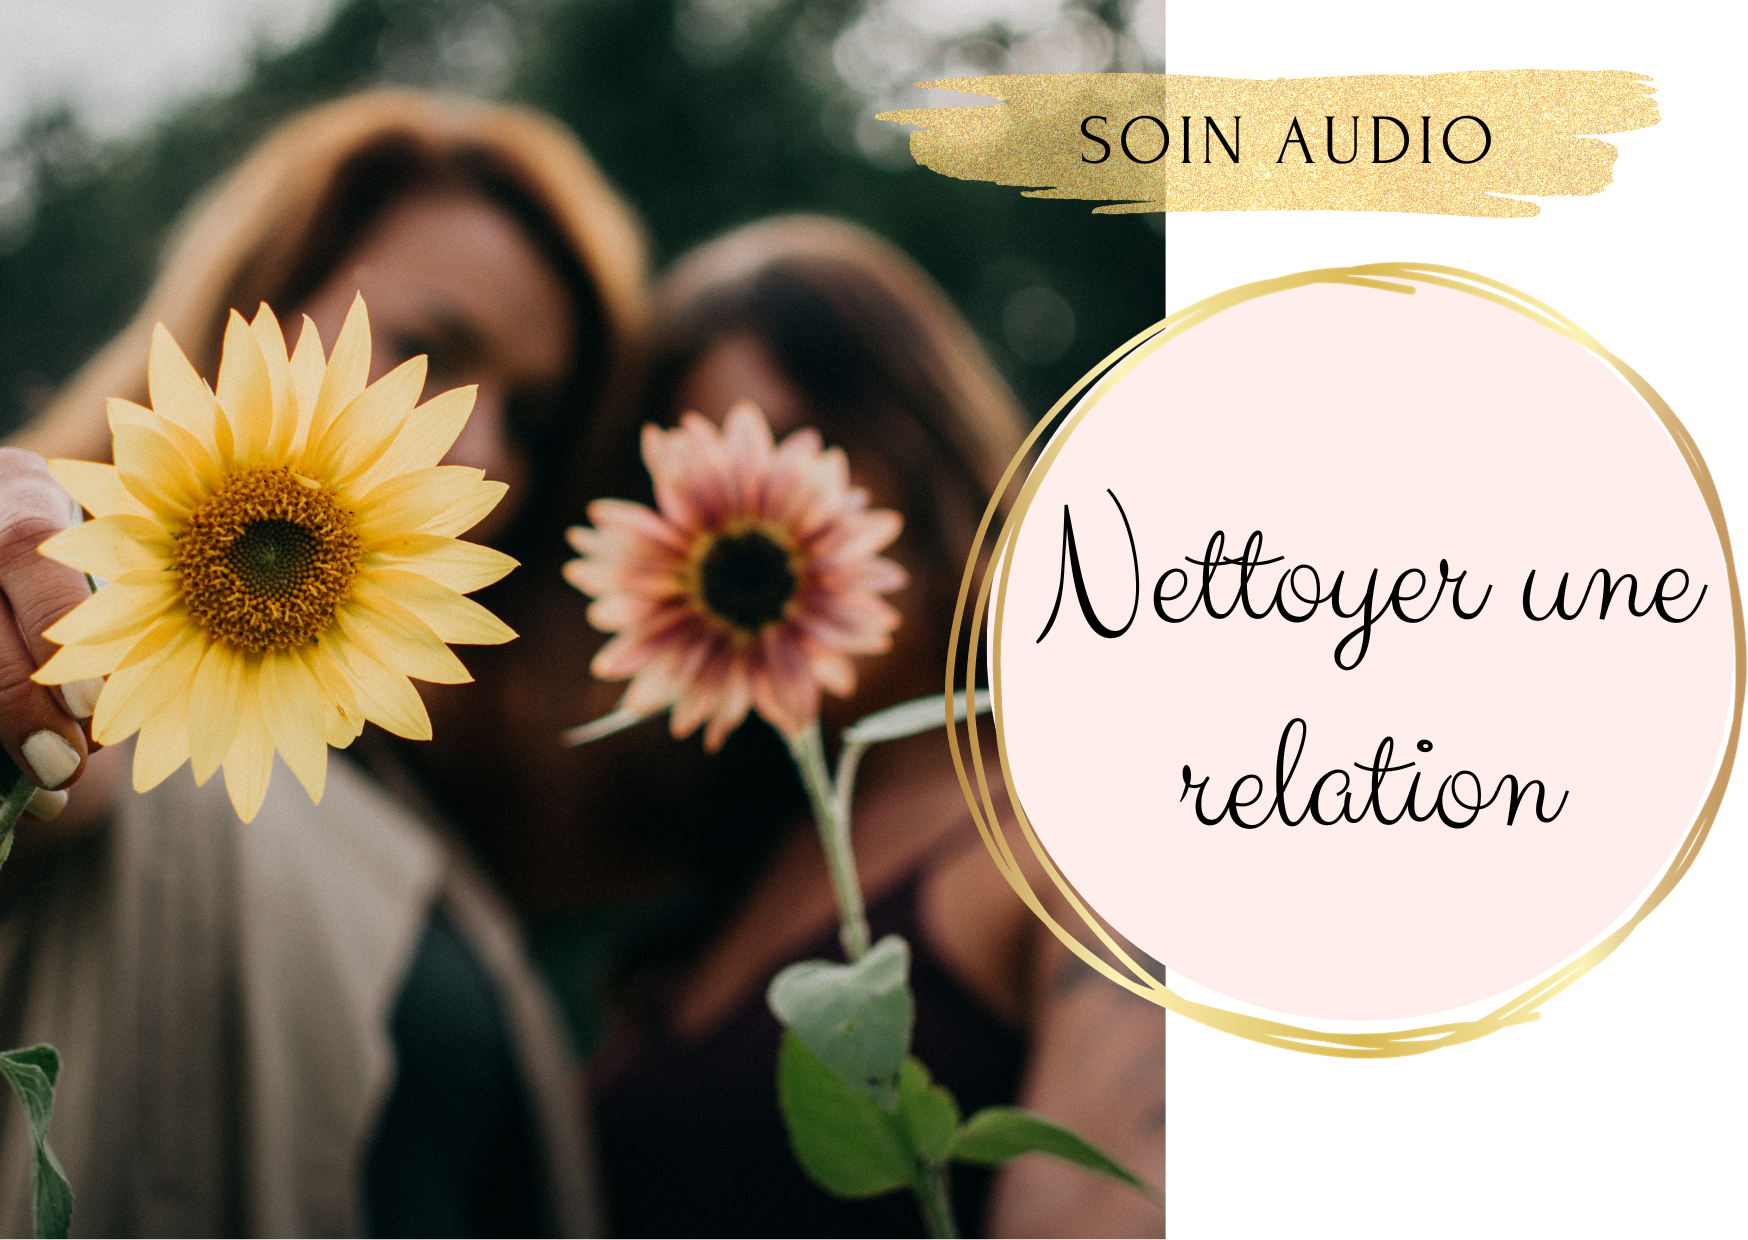 Soin audio – Nettoyer une relation en profondeur